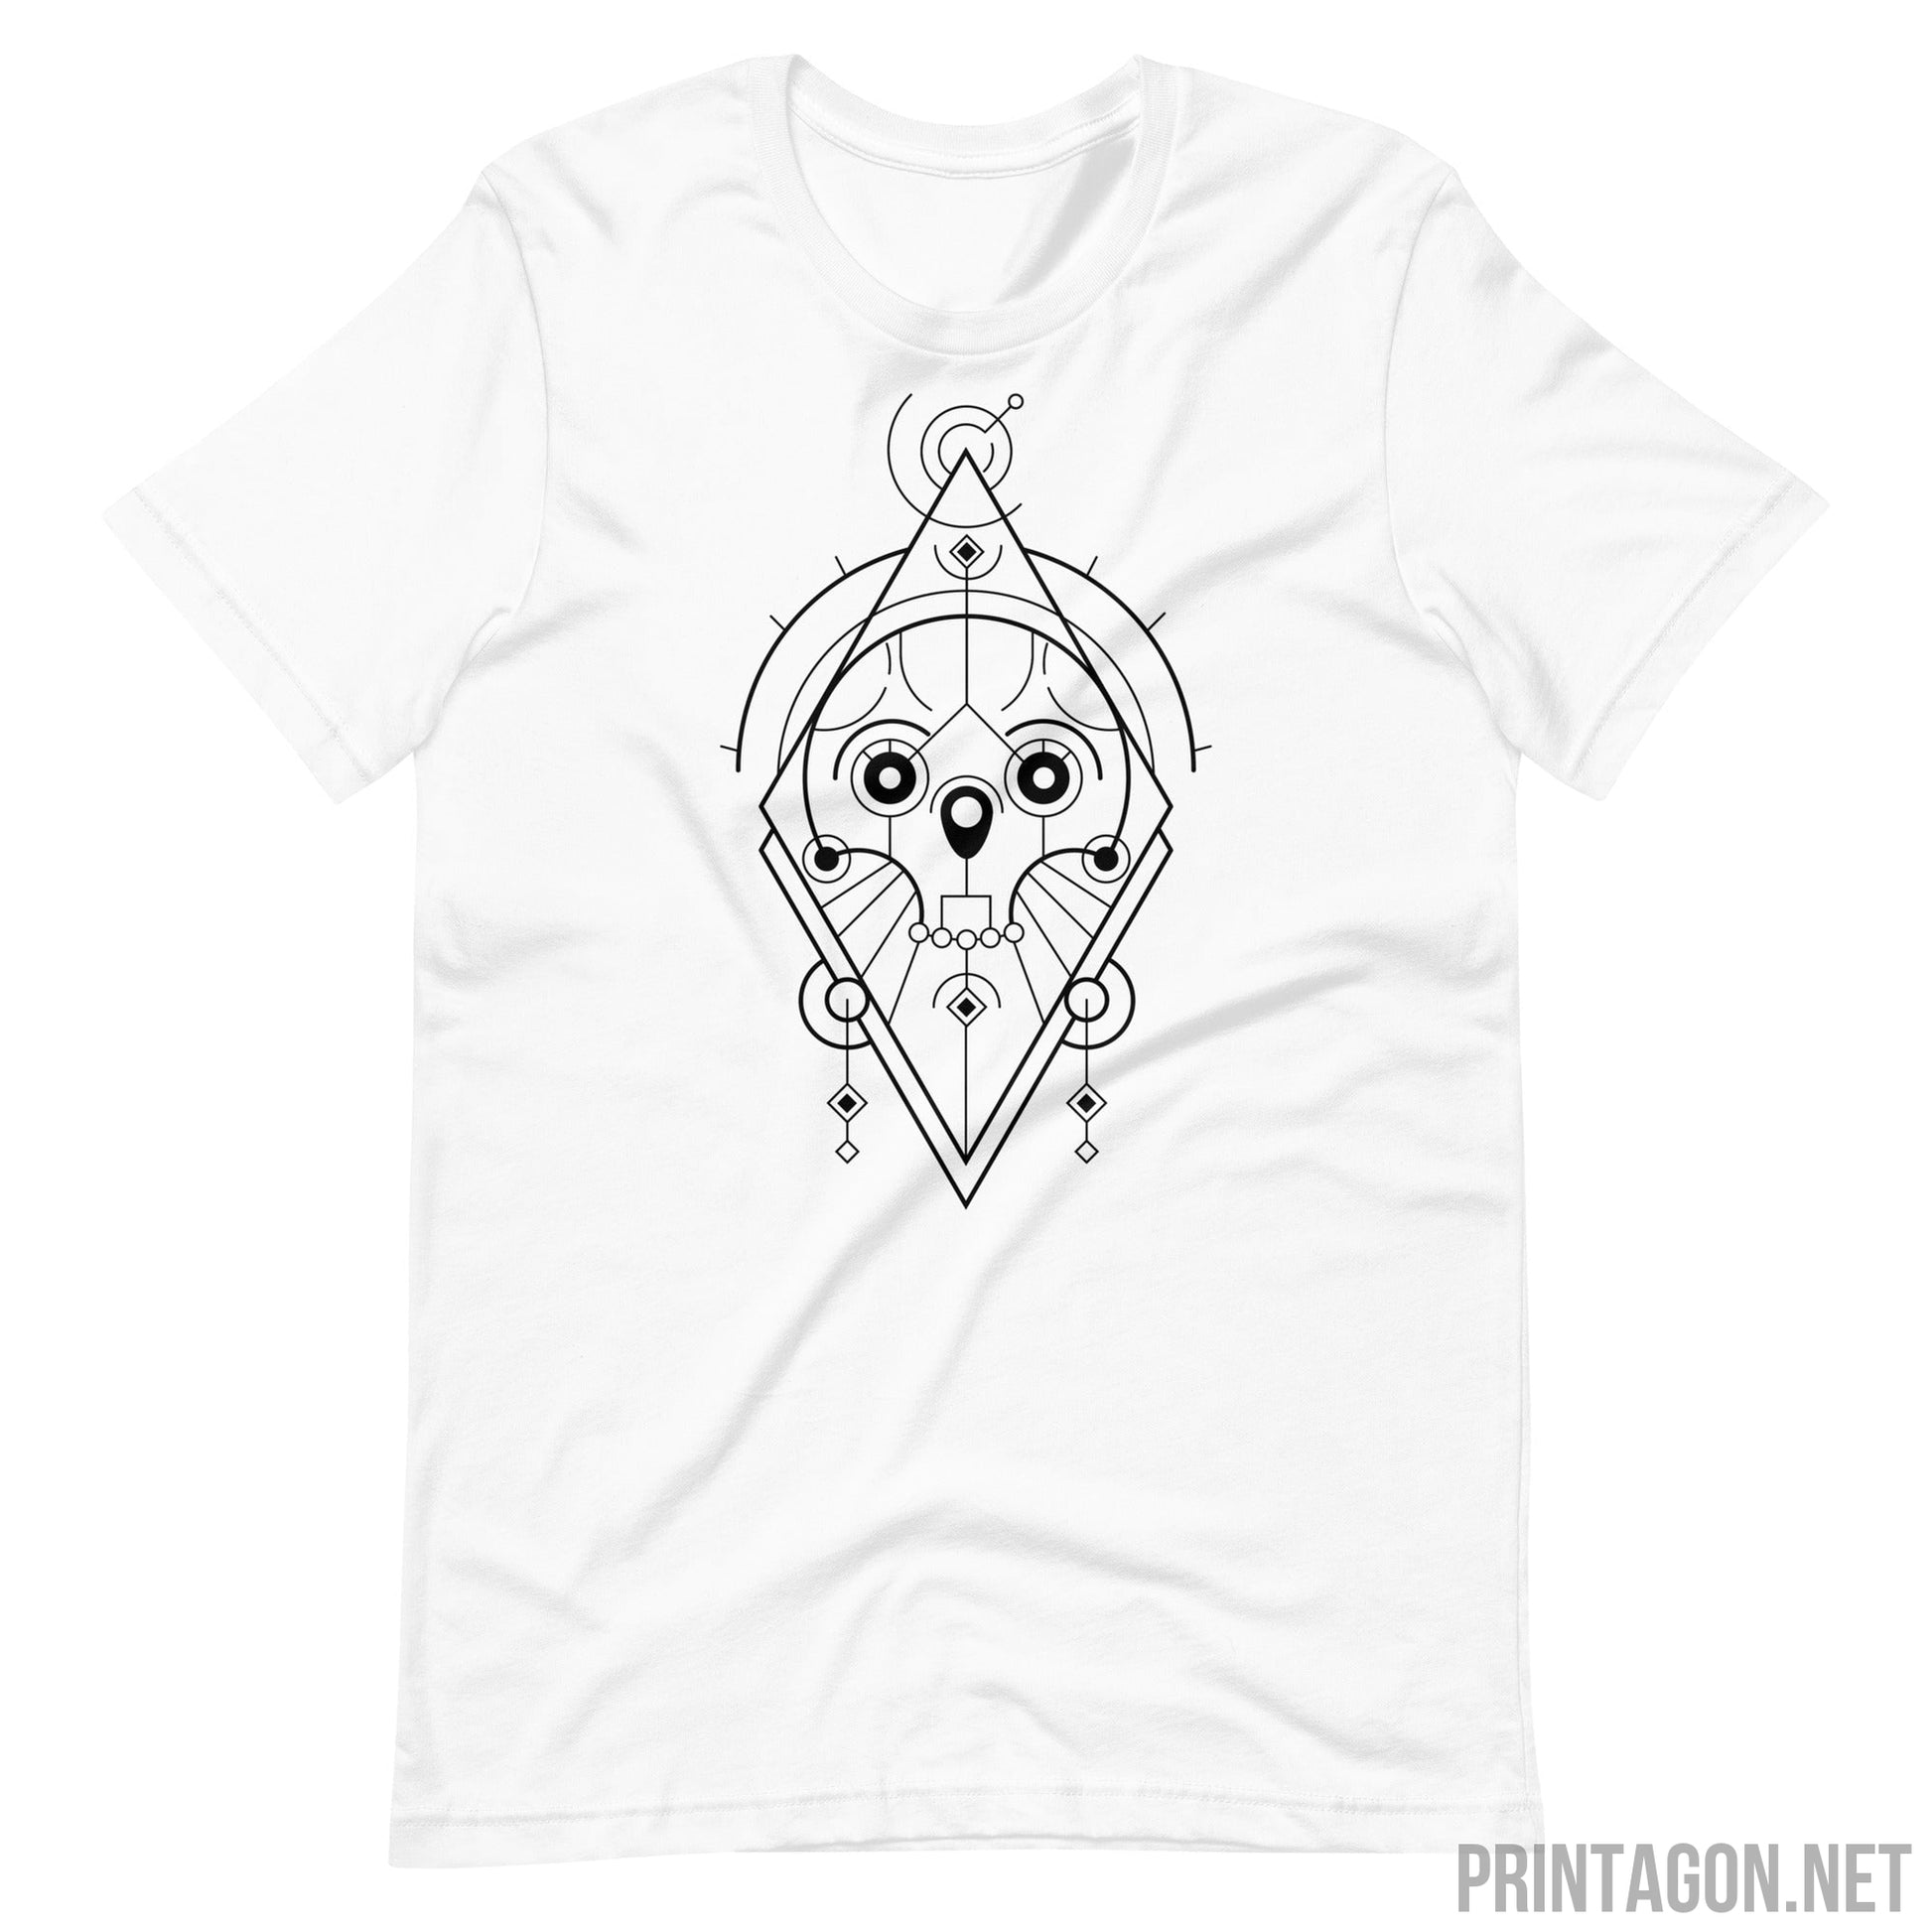 Sacred Geometric Skull - Unisex T-shirt - White / XS Printagon